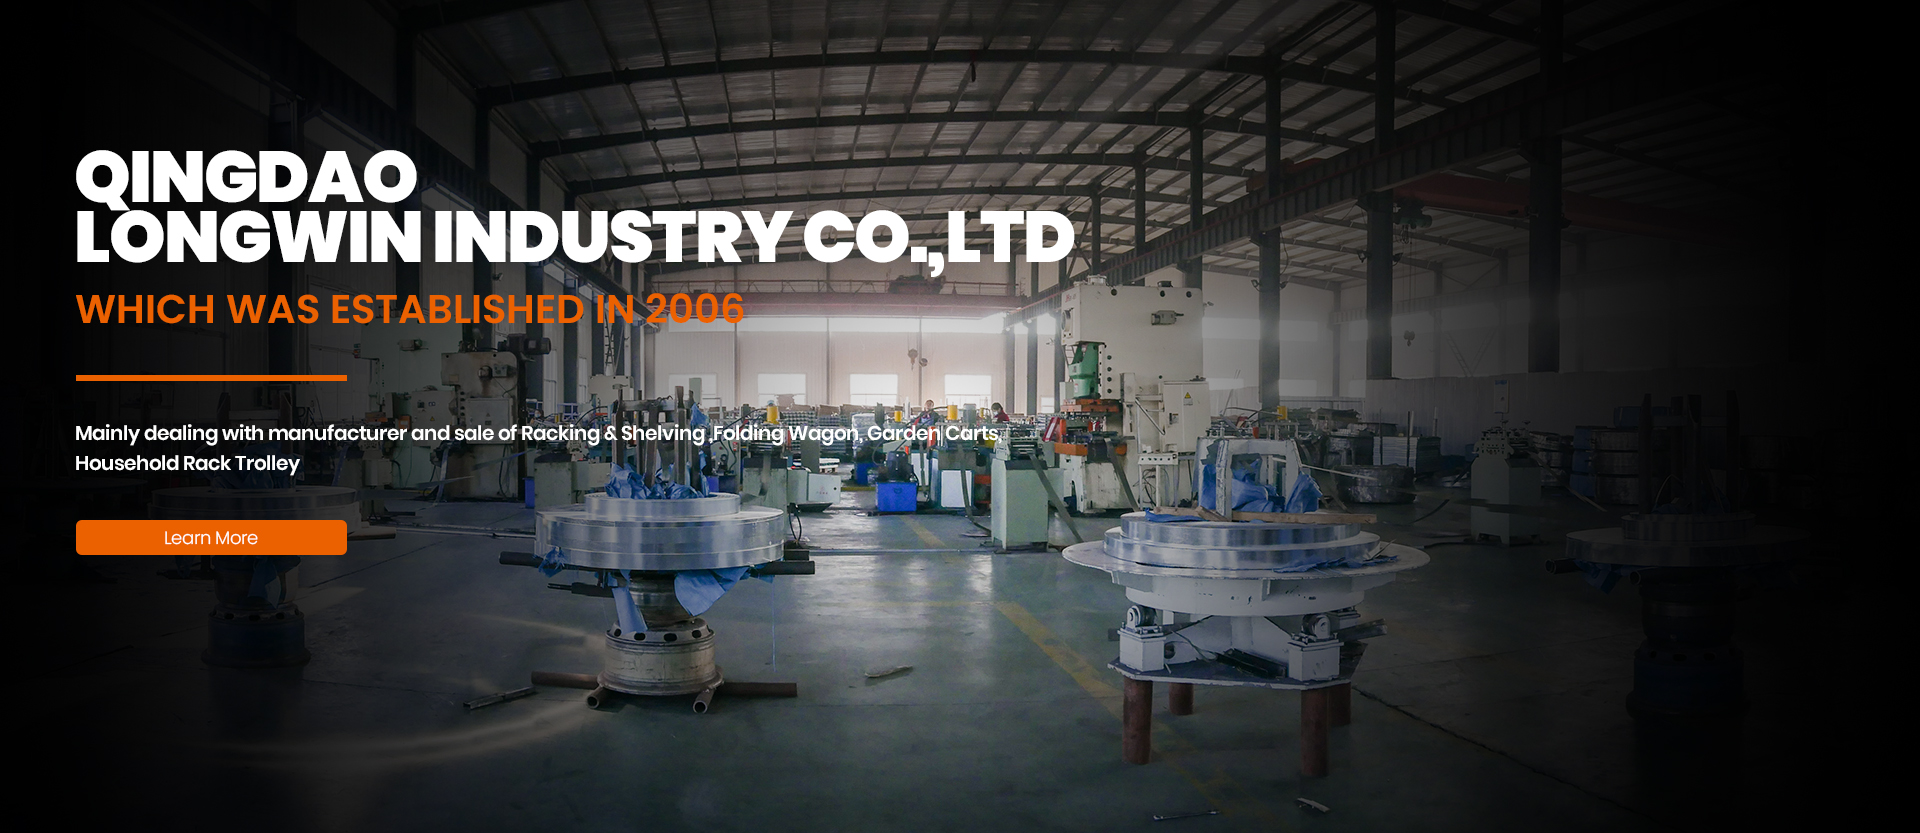 Циндао Longwin Industry Co., Ltd.